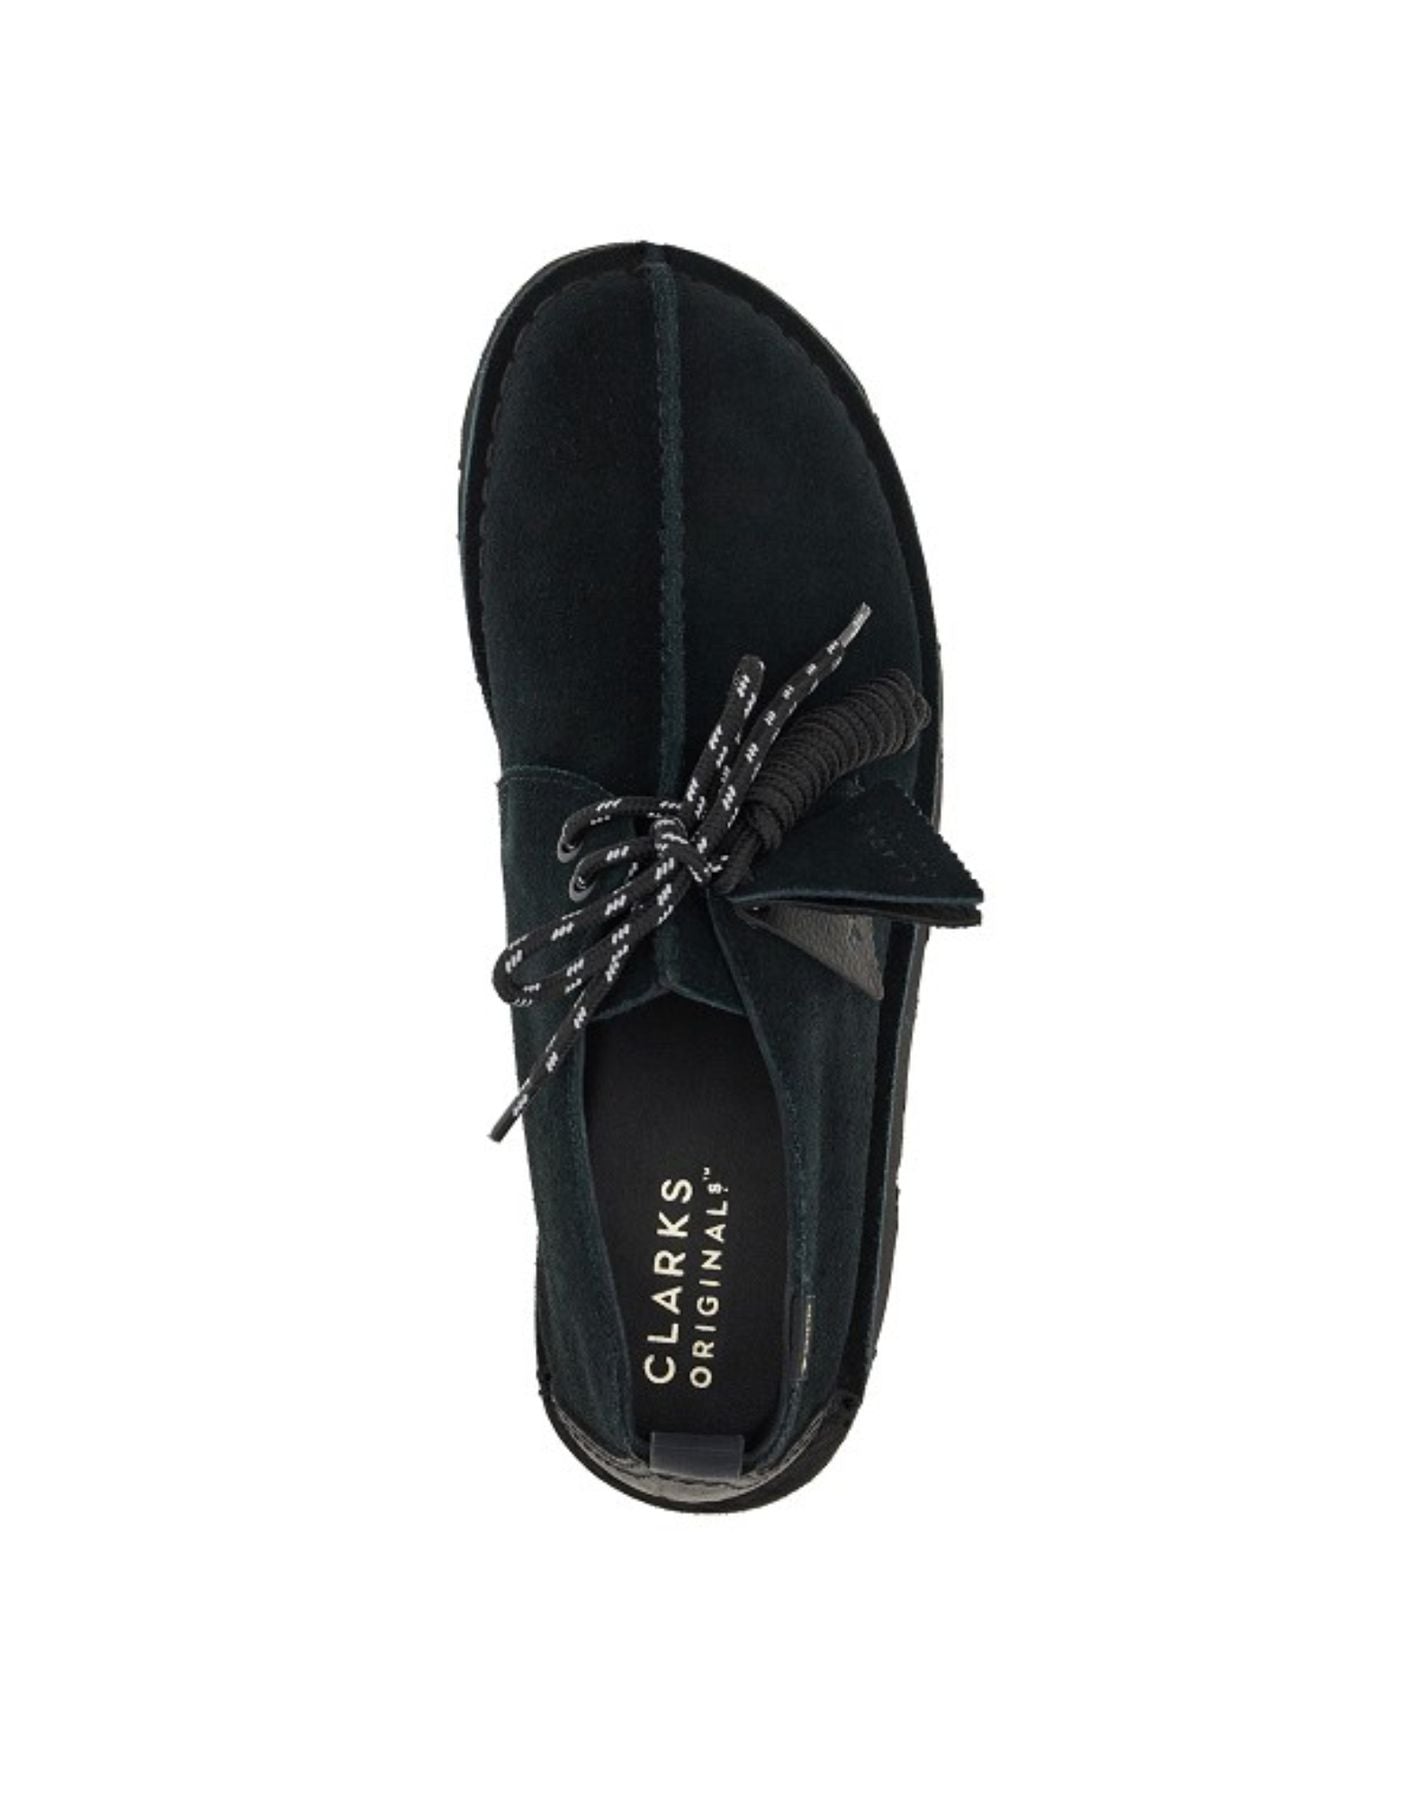 Chaussures pour homme DESERT TREKGTX BLACK SDE Clarks Originals